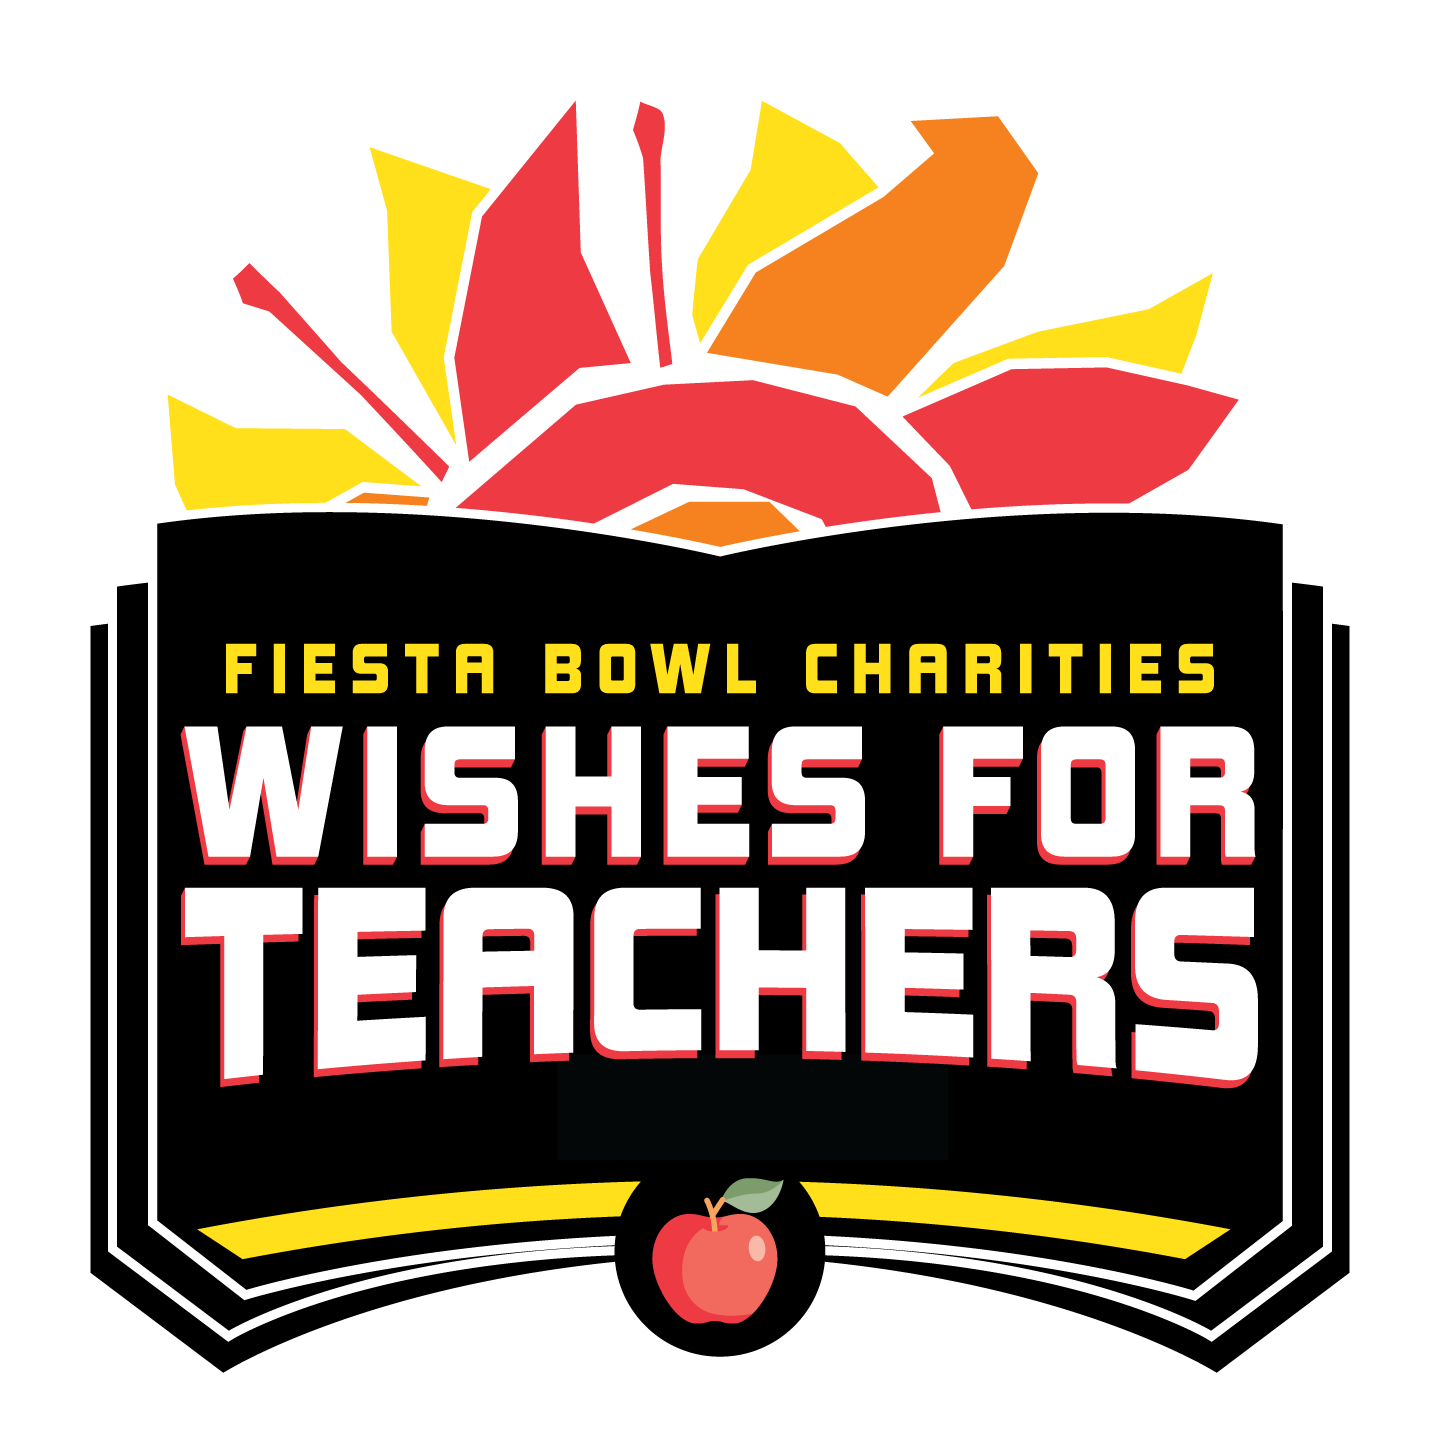 Fiesta Bowl Charities - Wishes for Teachers